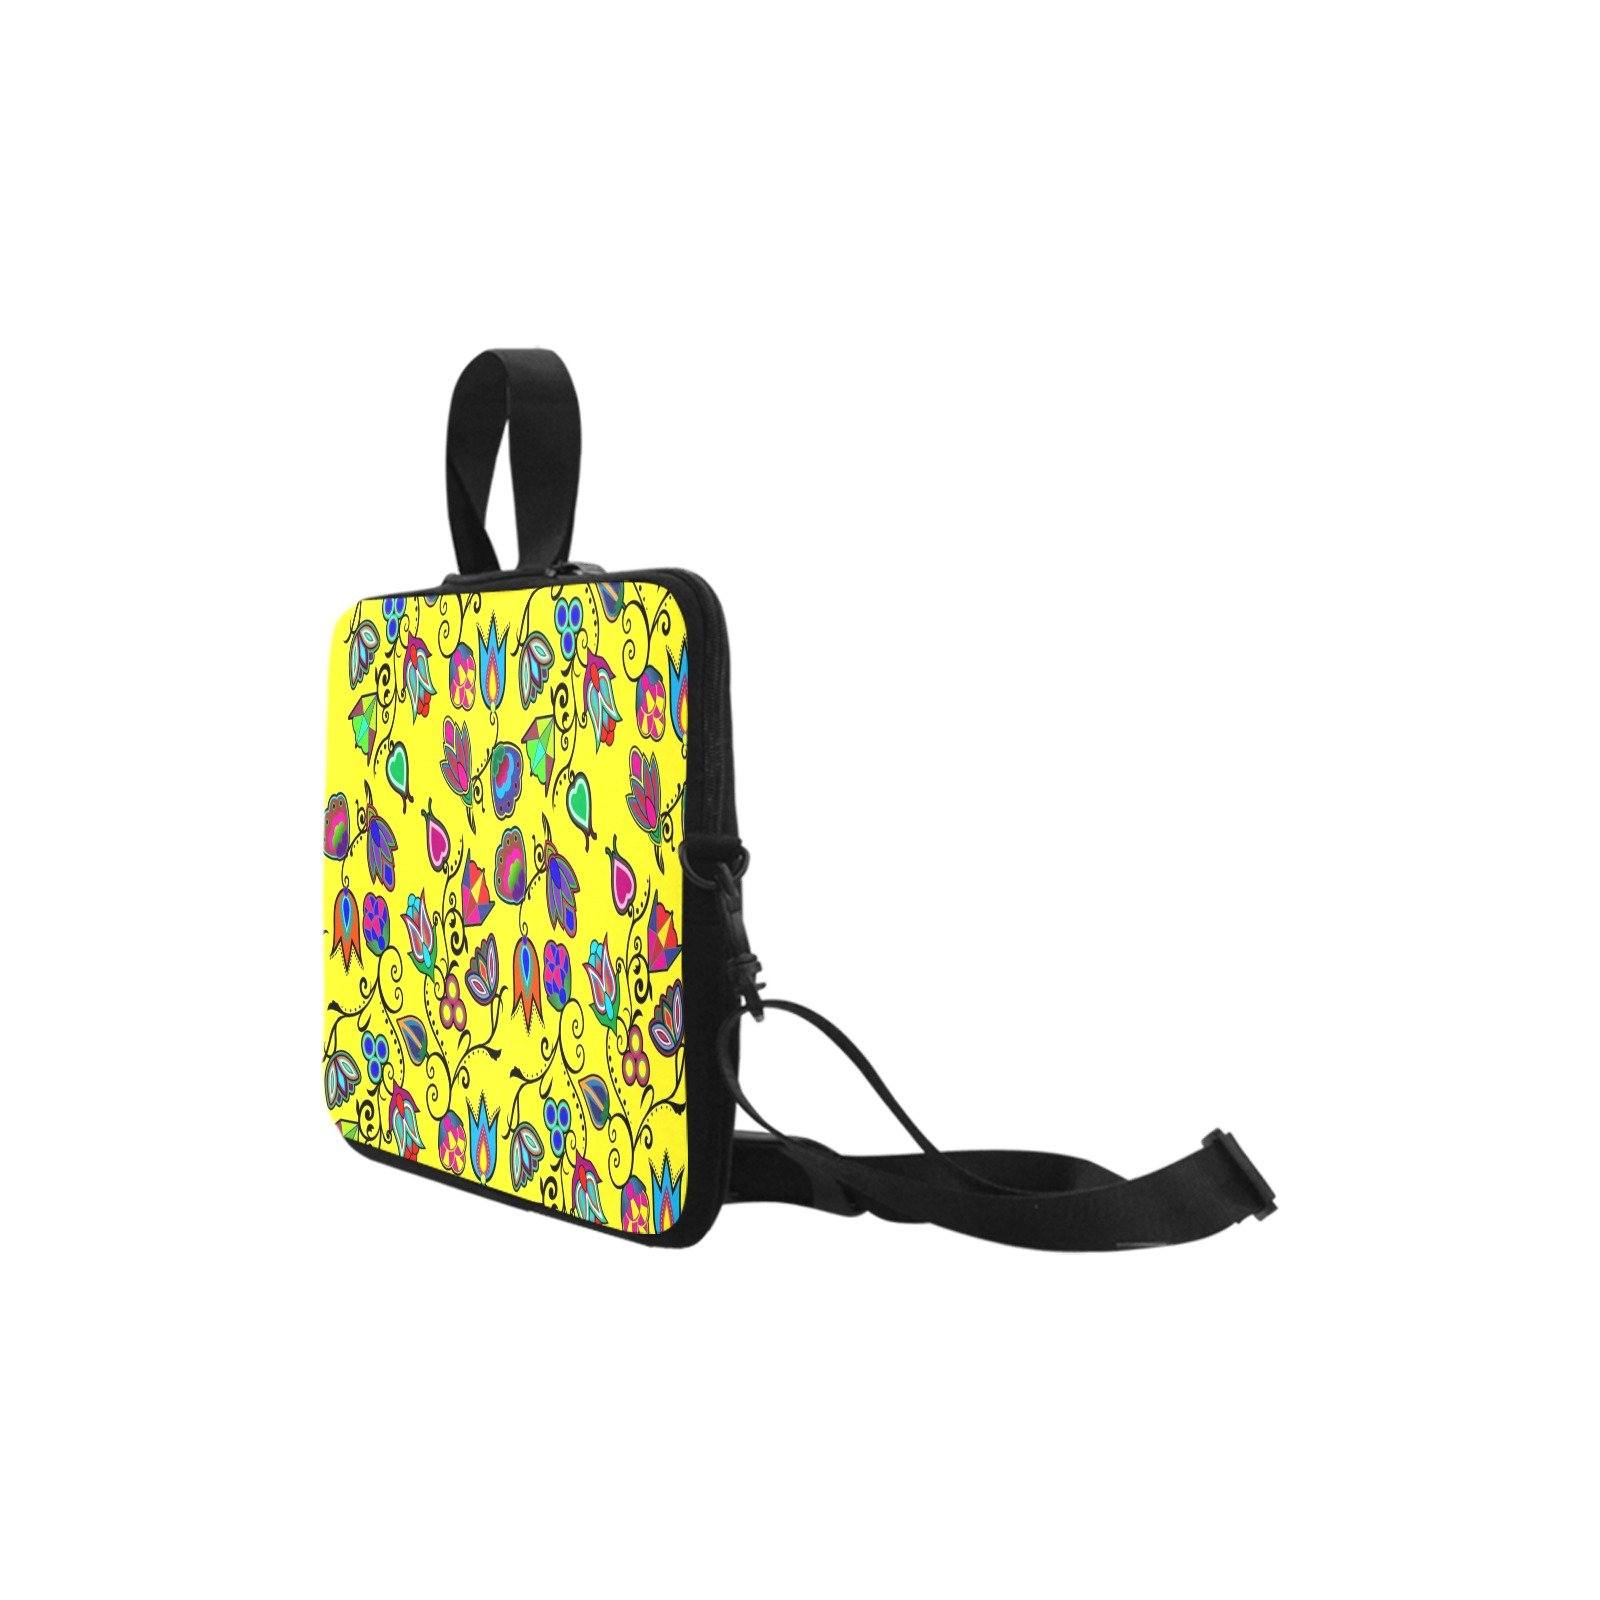 Indigenous Paisley Yellow Laptop Handbags 11" bag e-joyer 